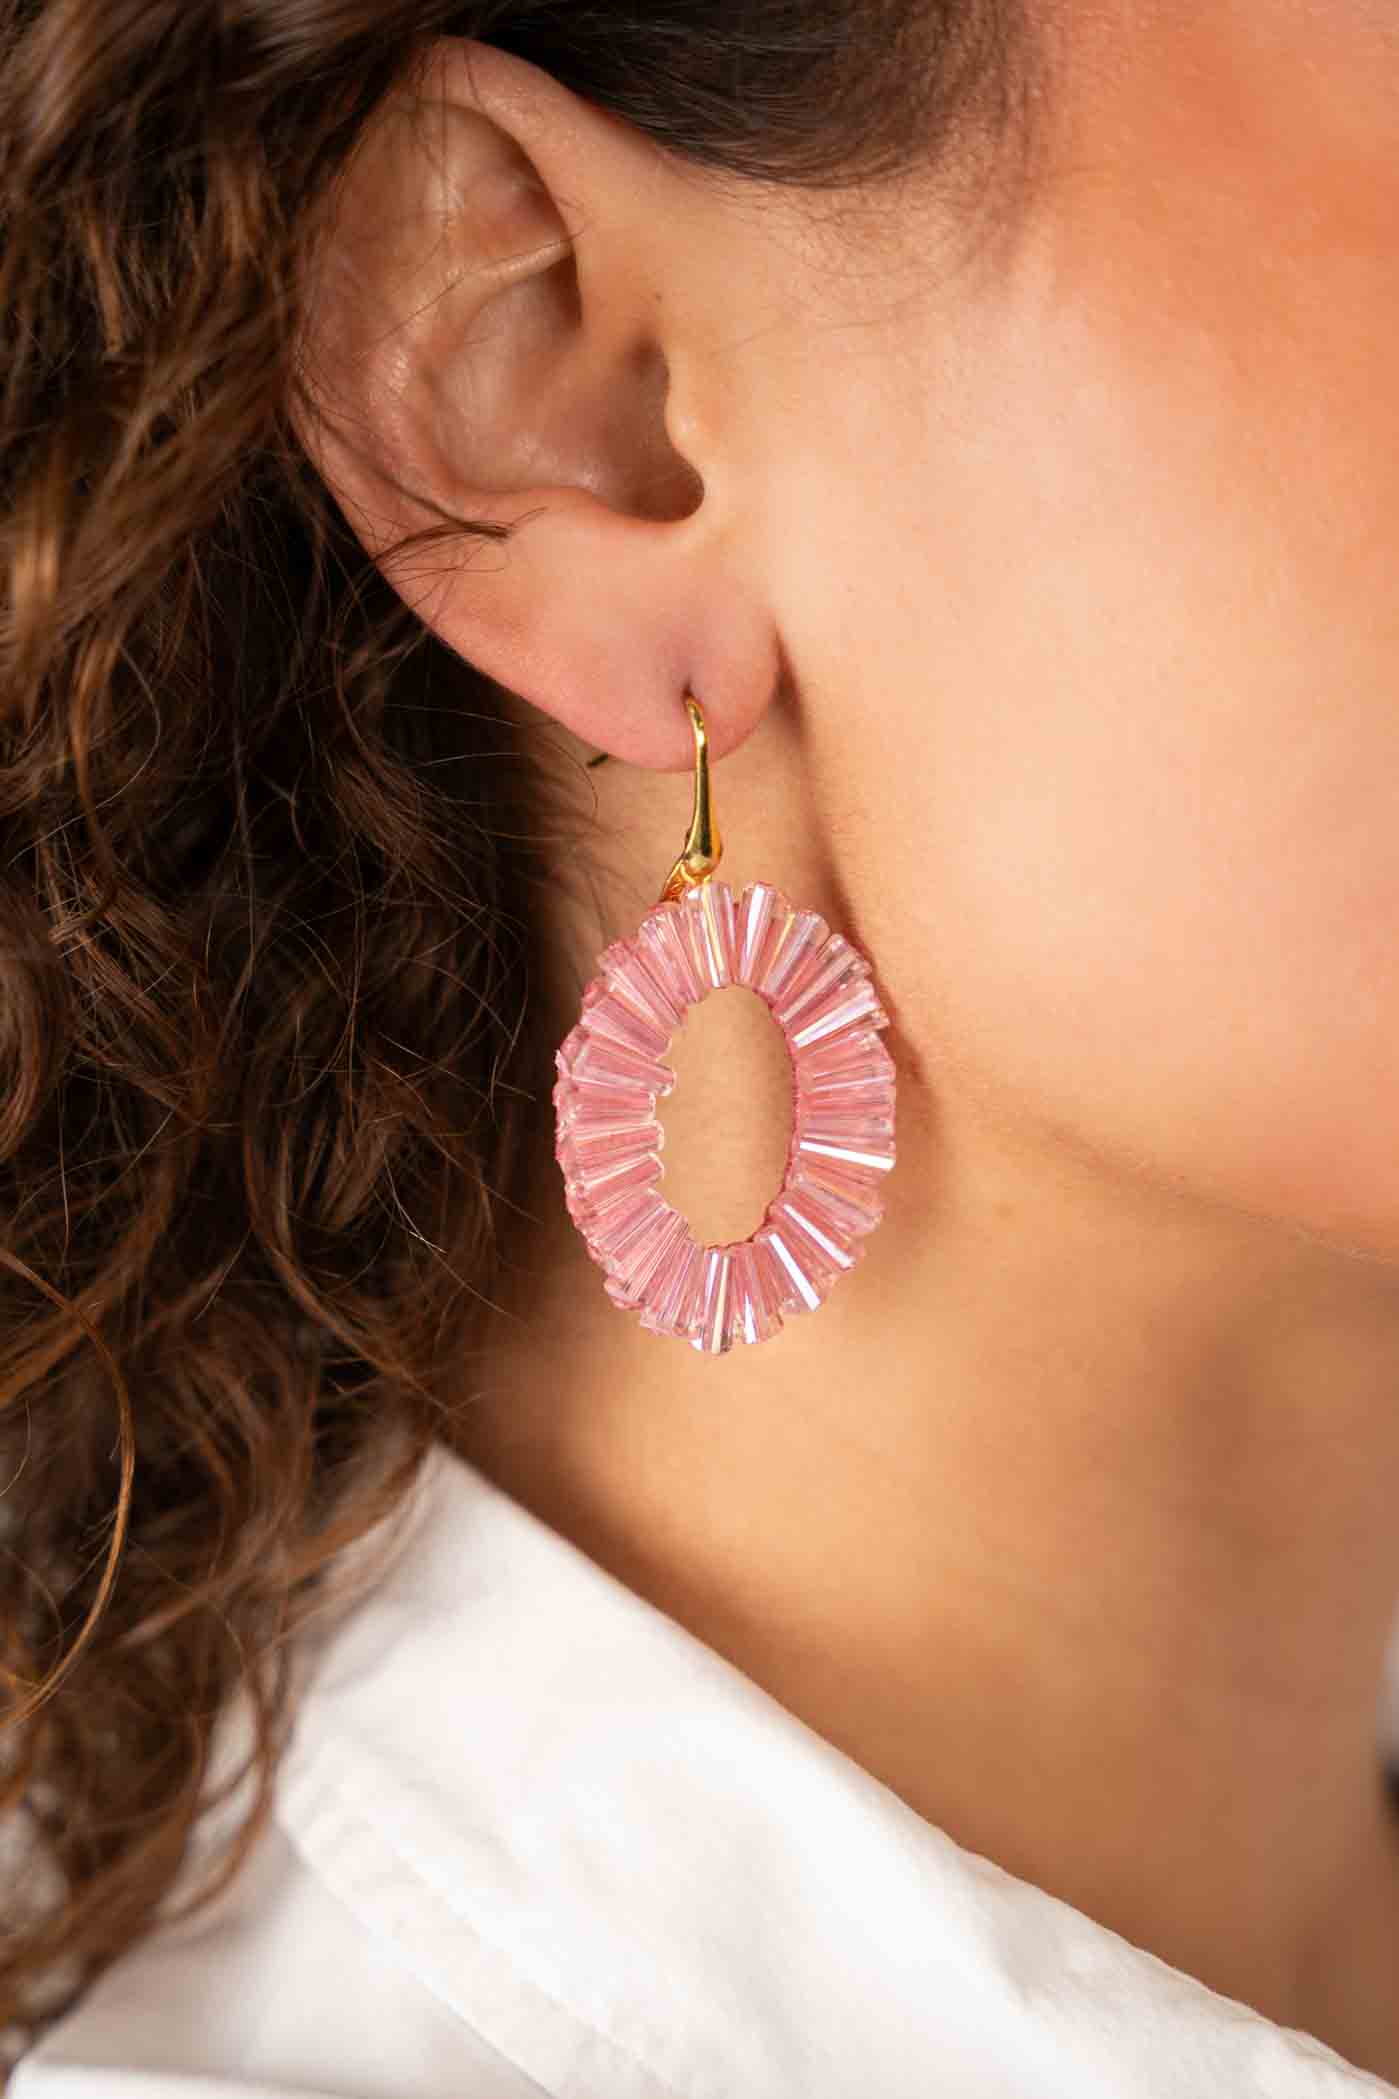 Pink Earrings Danee Oval Tube Cliplott-theme.productDescriptionPage.SEO.byTheBrand